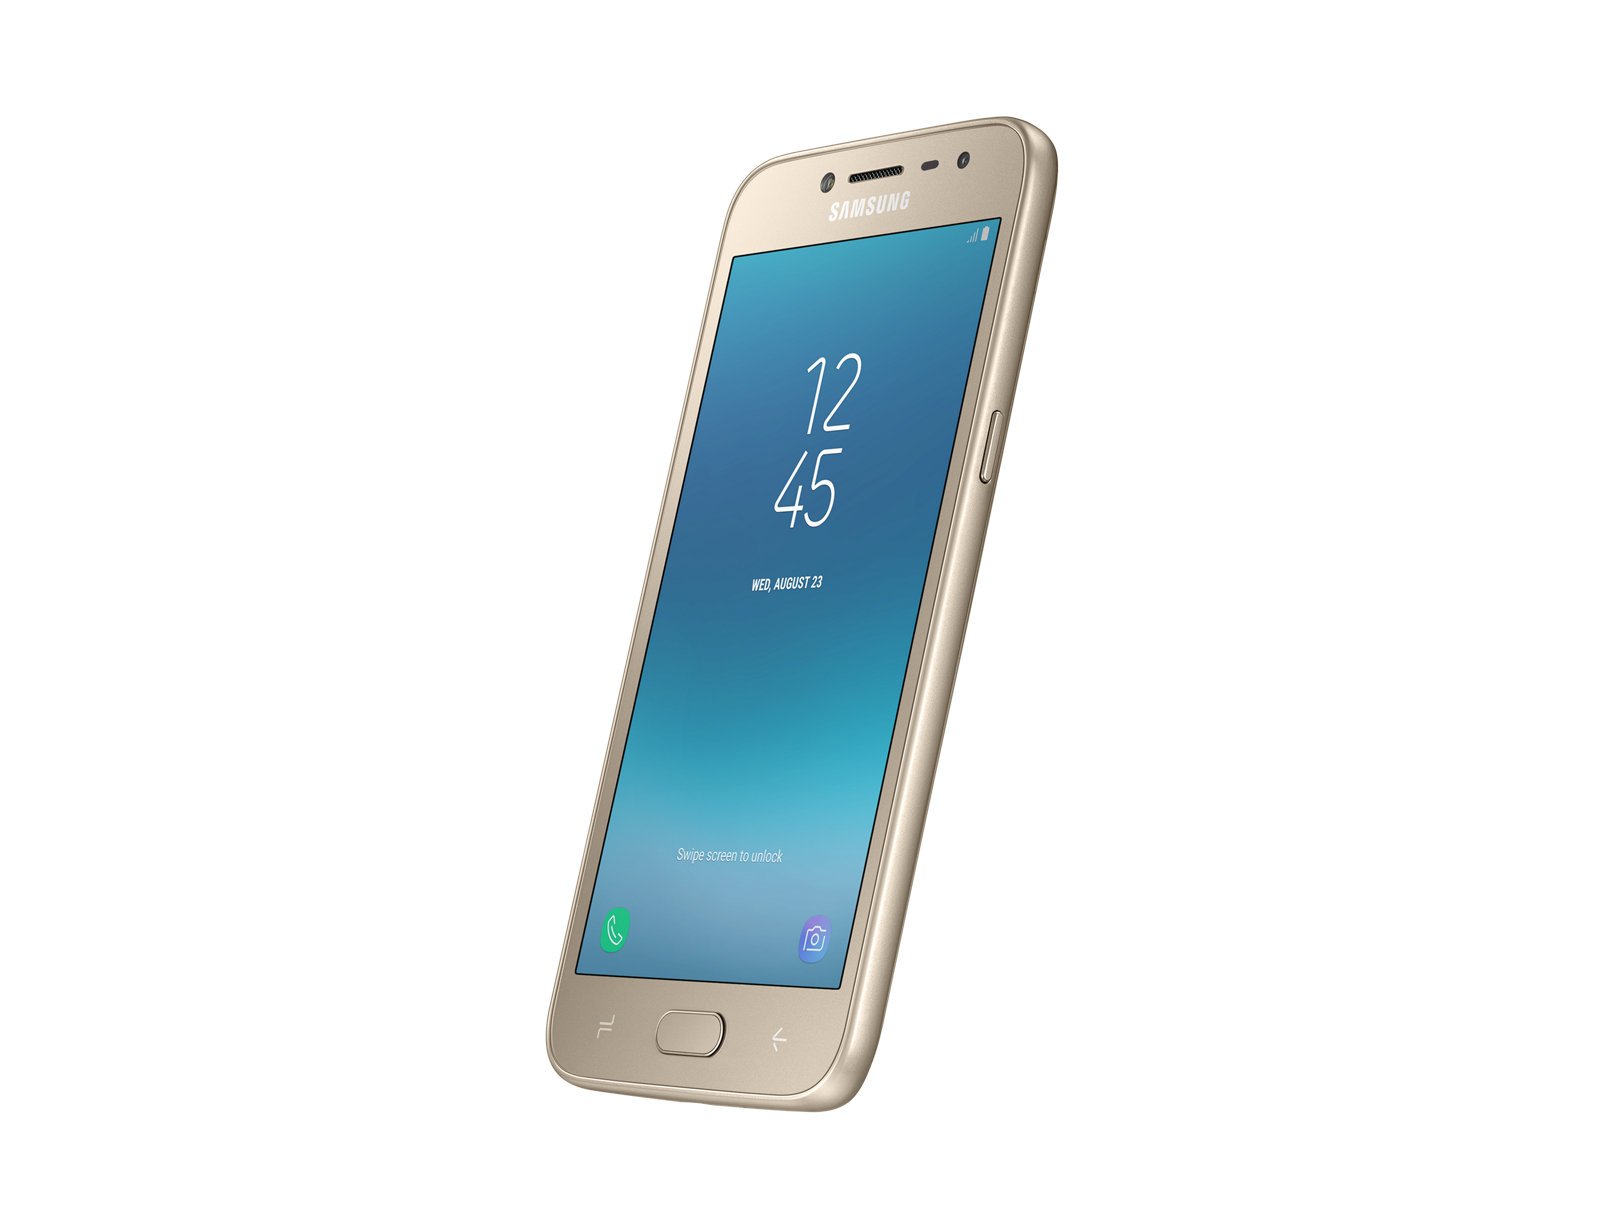 Samsung Galaxy Grand Prime Pro review